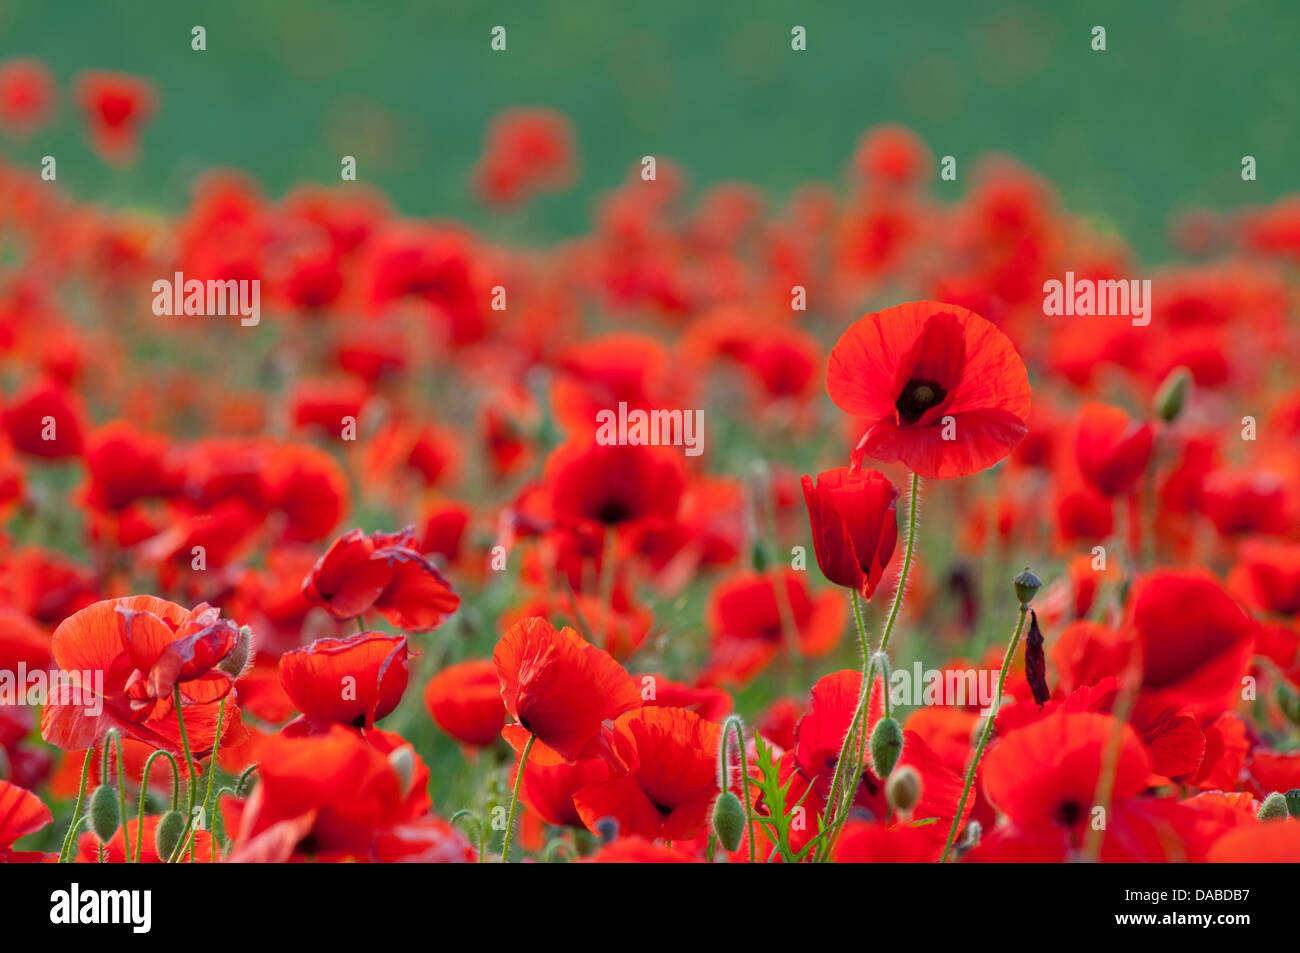 Landscape of large poppy flower in field of poppies de-focused in background Stock Photo